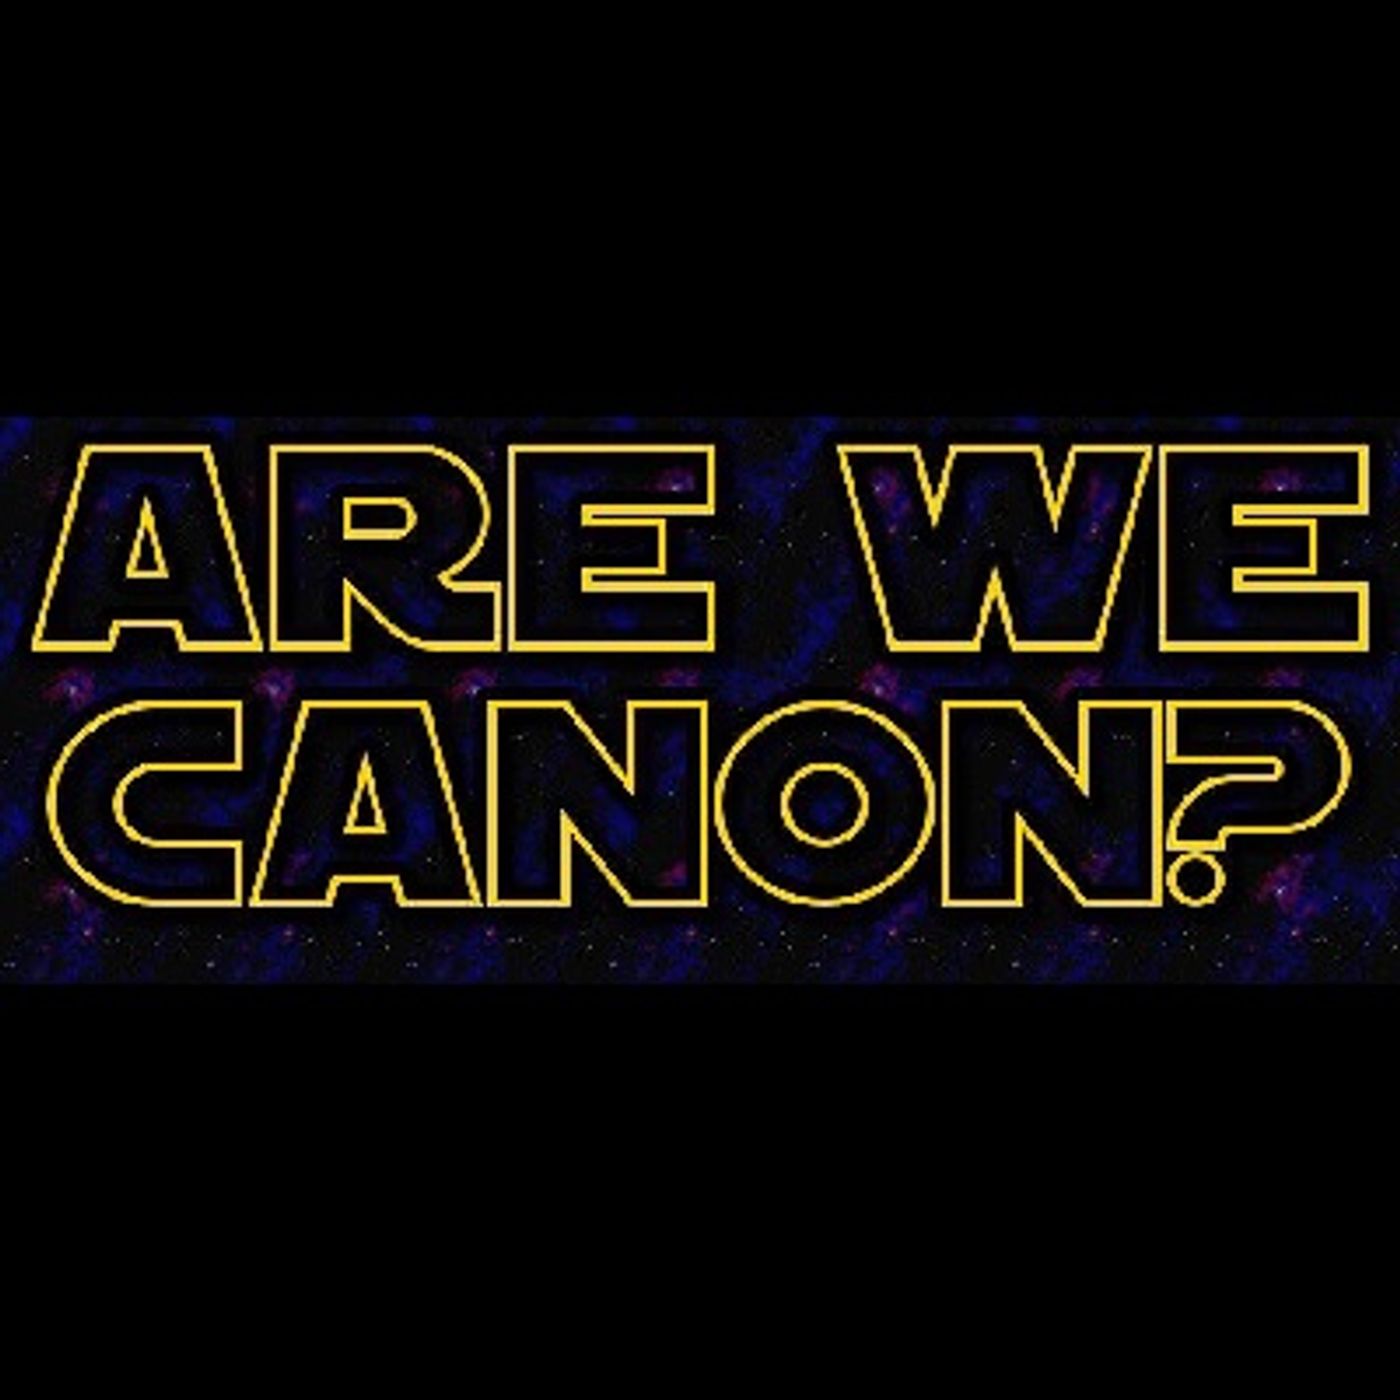 Are We Canon?